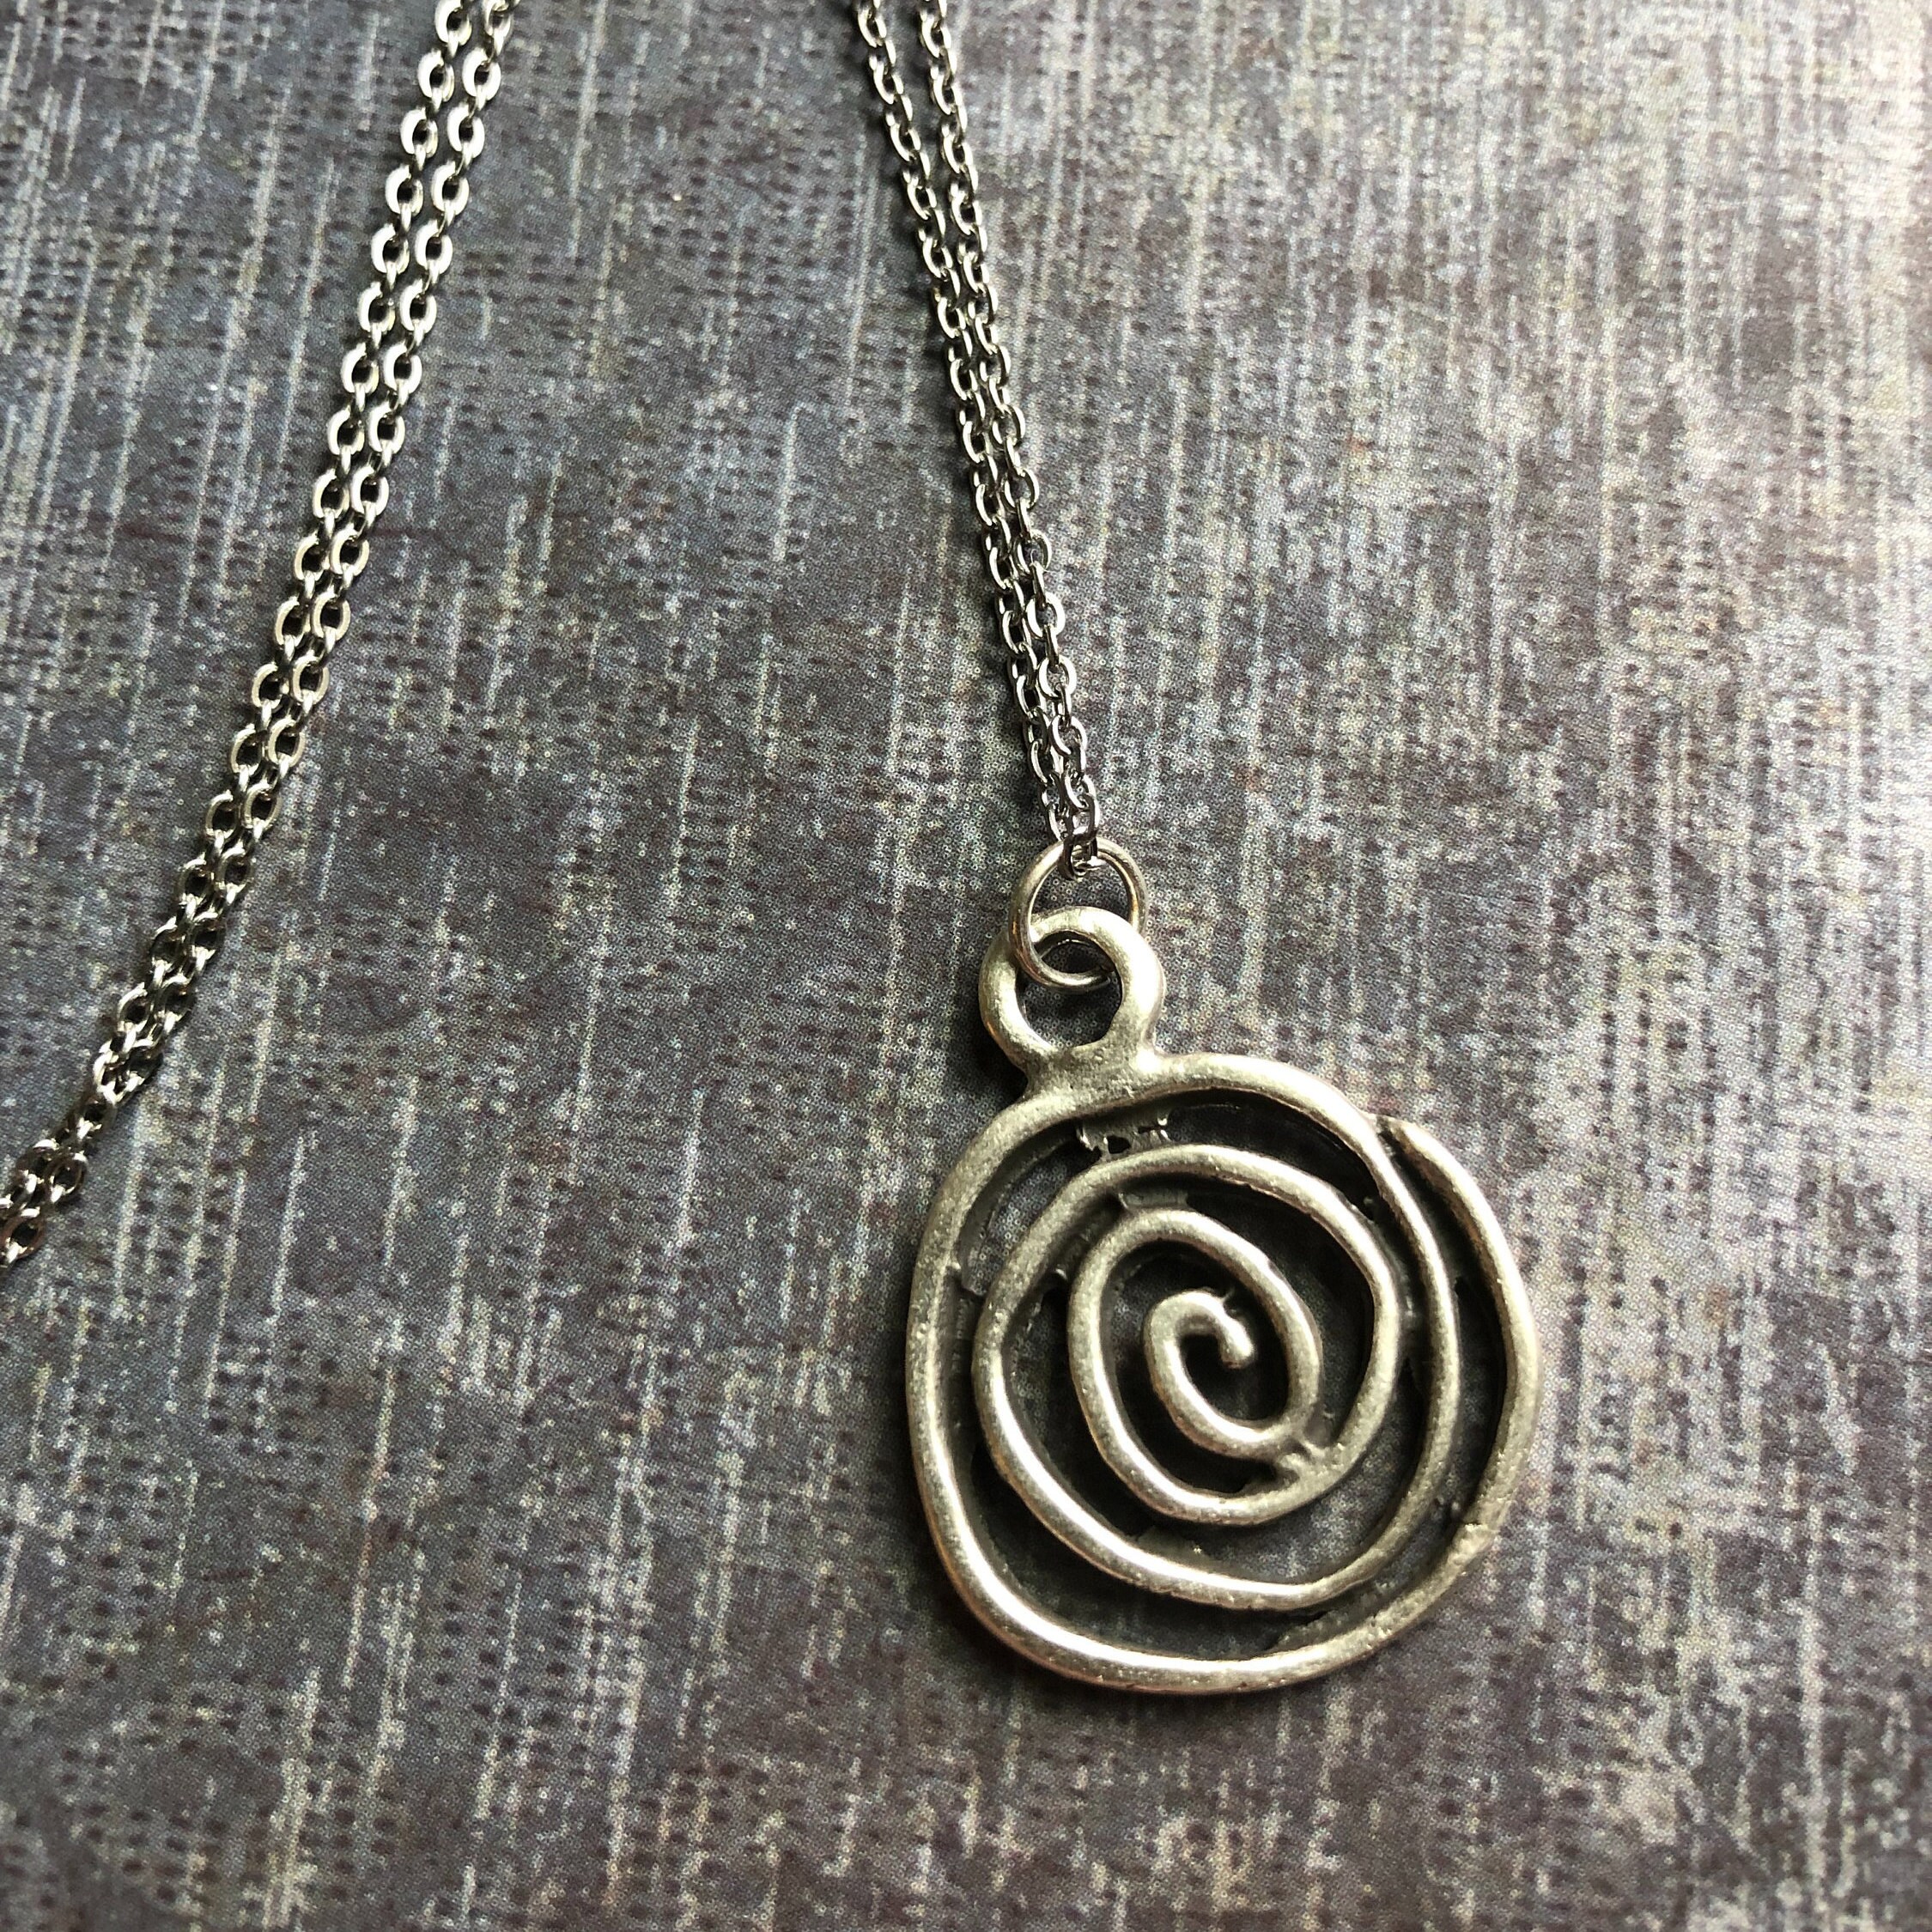 Silver Boho Necklace / Swirl Pendant Necklace / Hippie | Etsy